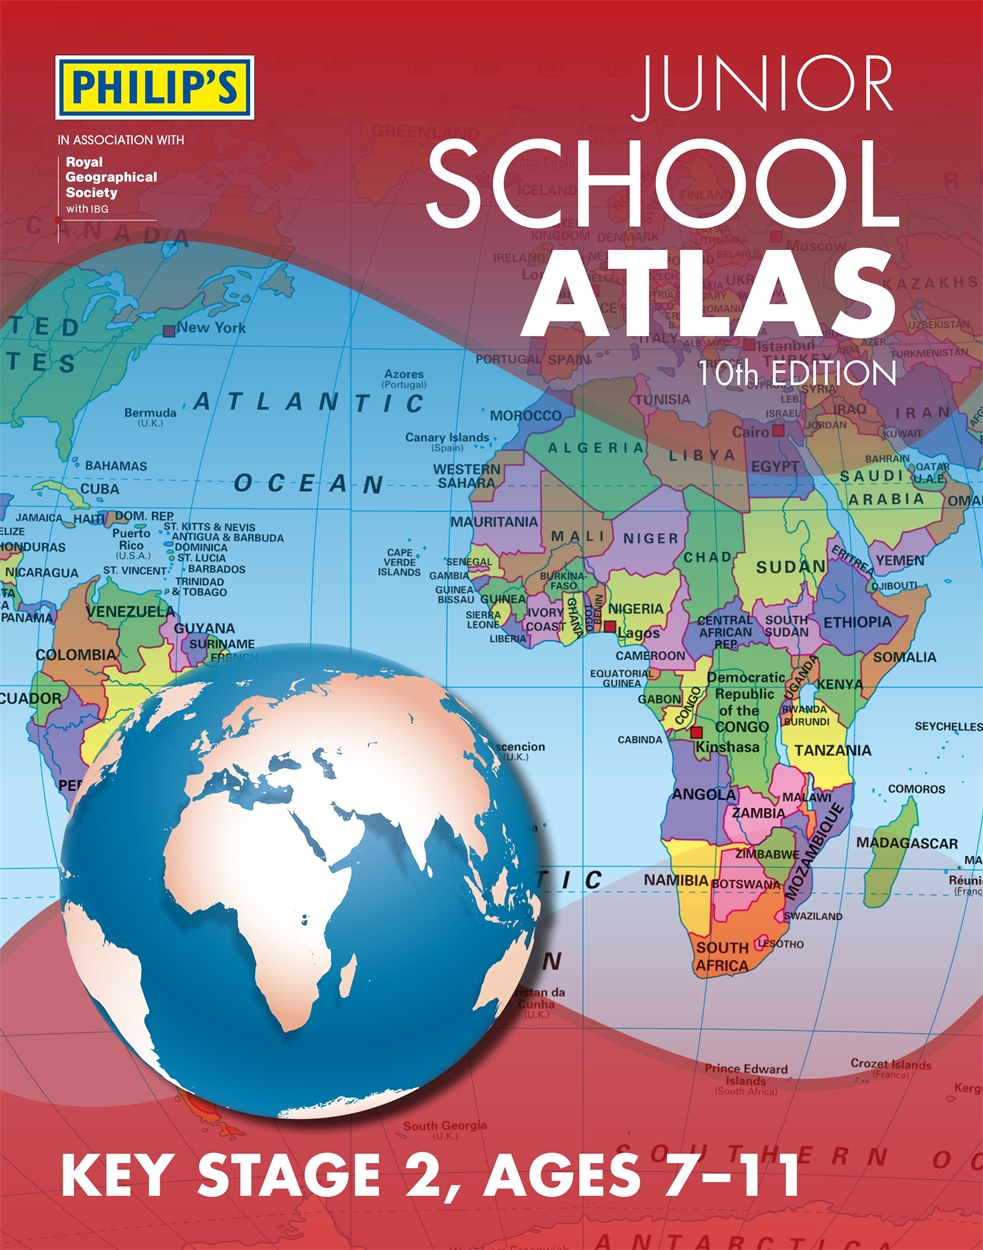 Philip's Junior School Atlas 10th Edition by Hachette UK